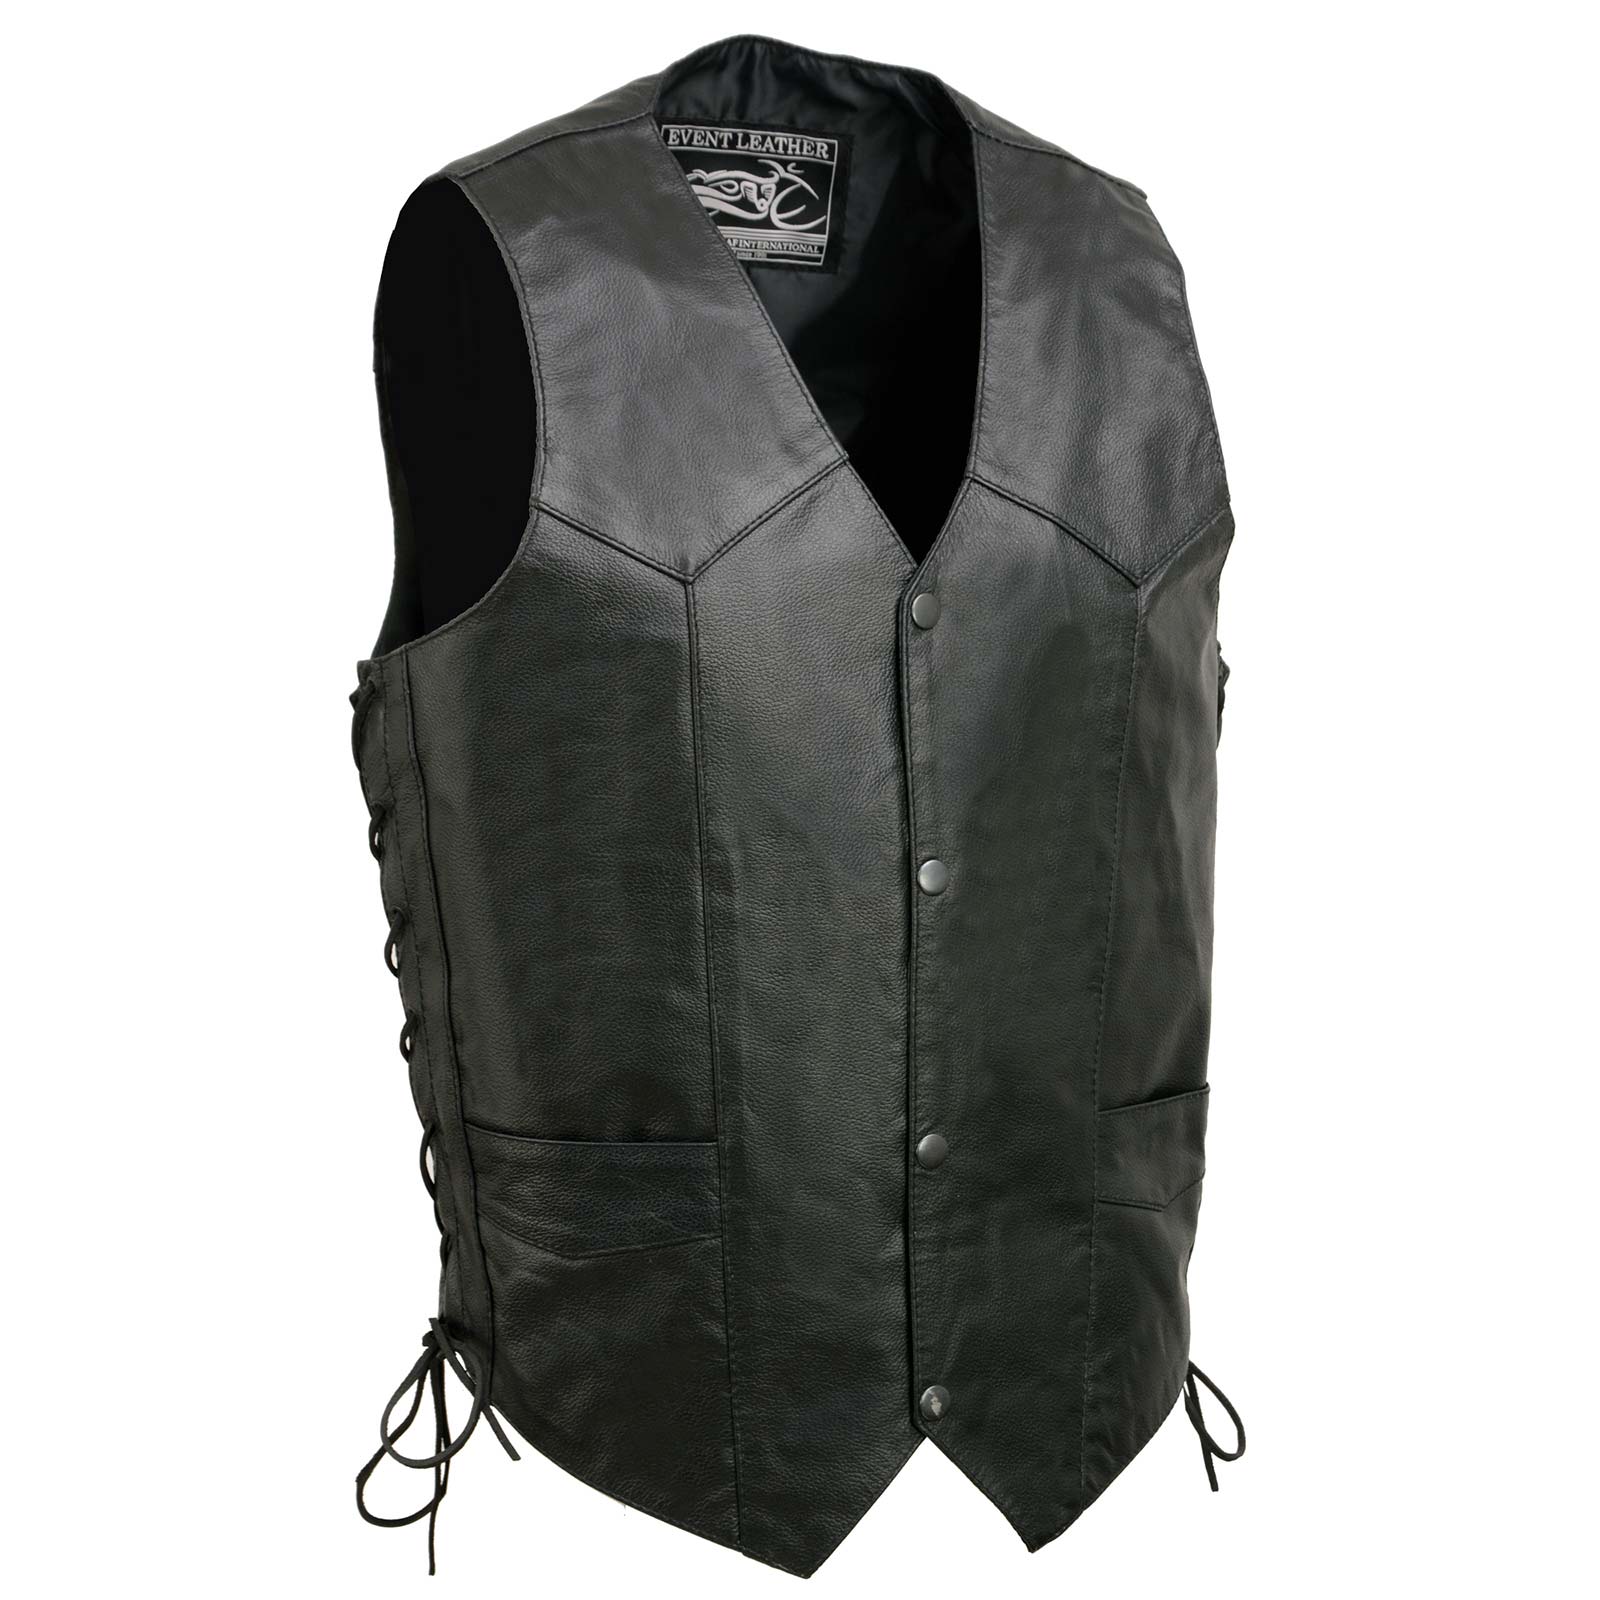 Event Leather EL1315 Black Motorcycle Leather Vest for Men w/ Side Lace ...